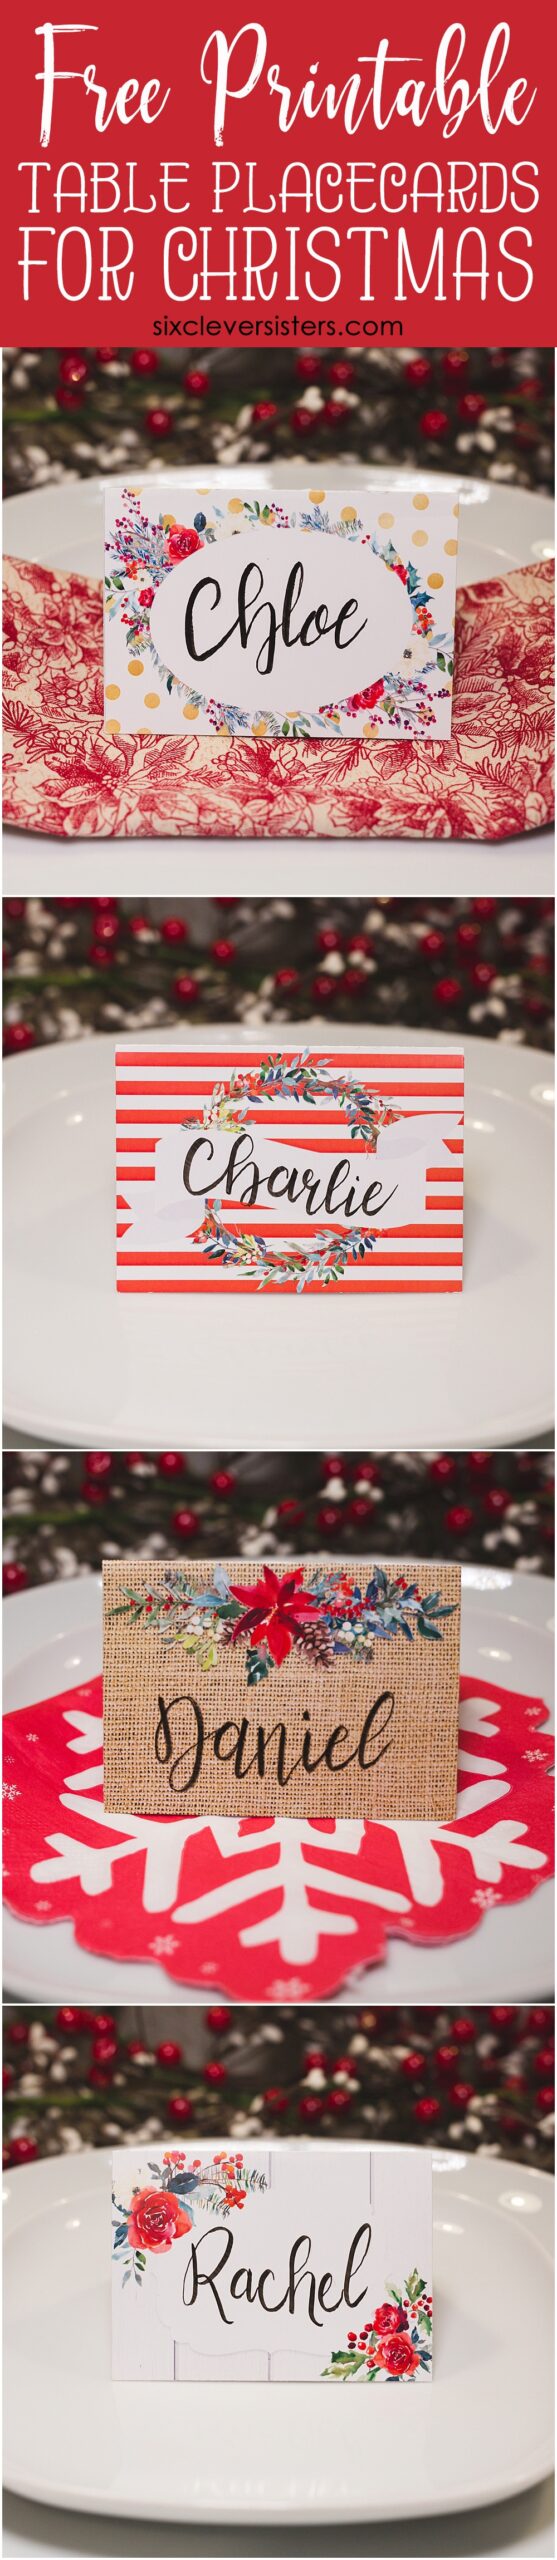 Christmas Table Place Cards FREE PRINTABLE Six Clever Sisters - Christmas Table Name Cards Free Printable